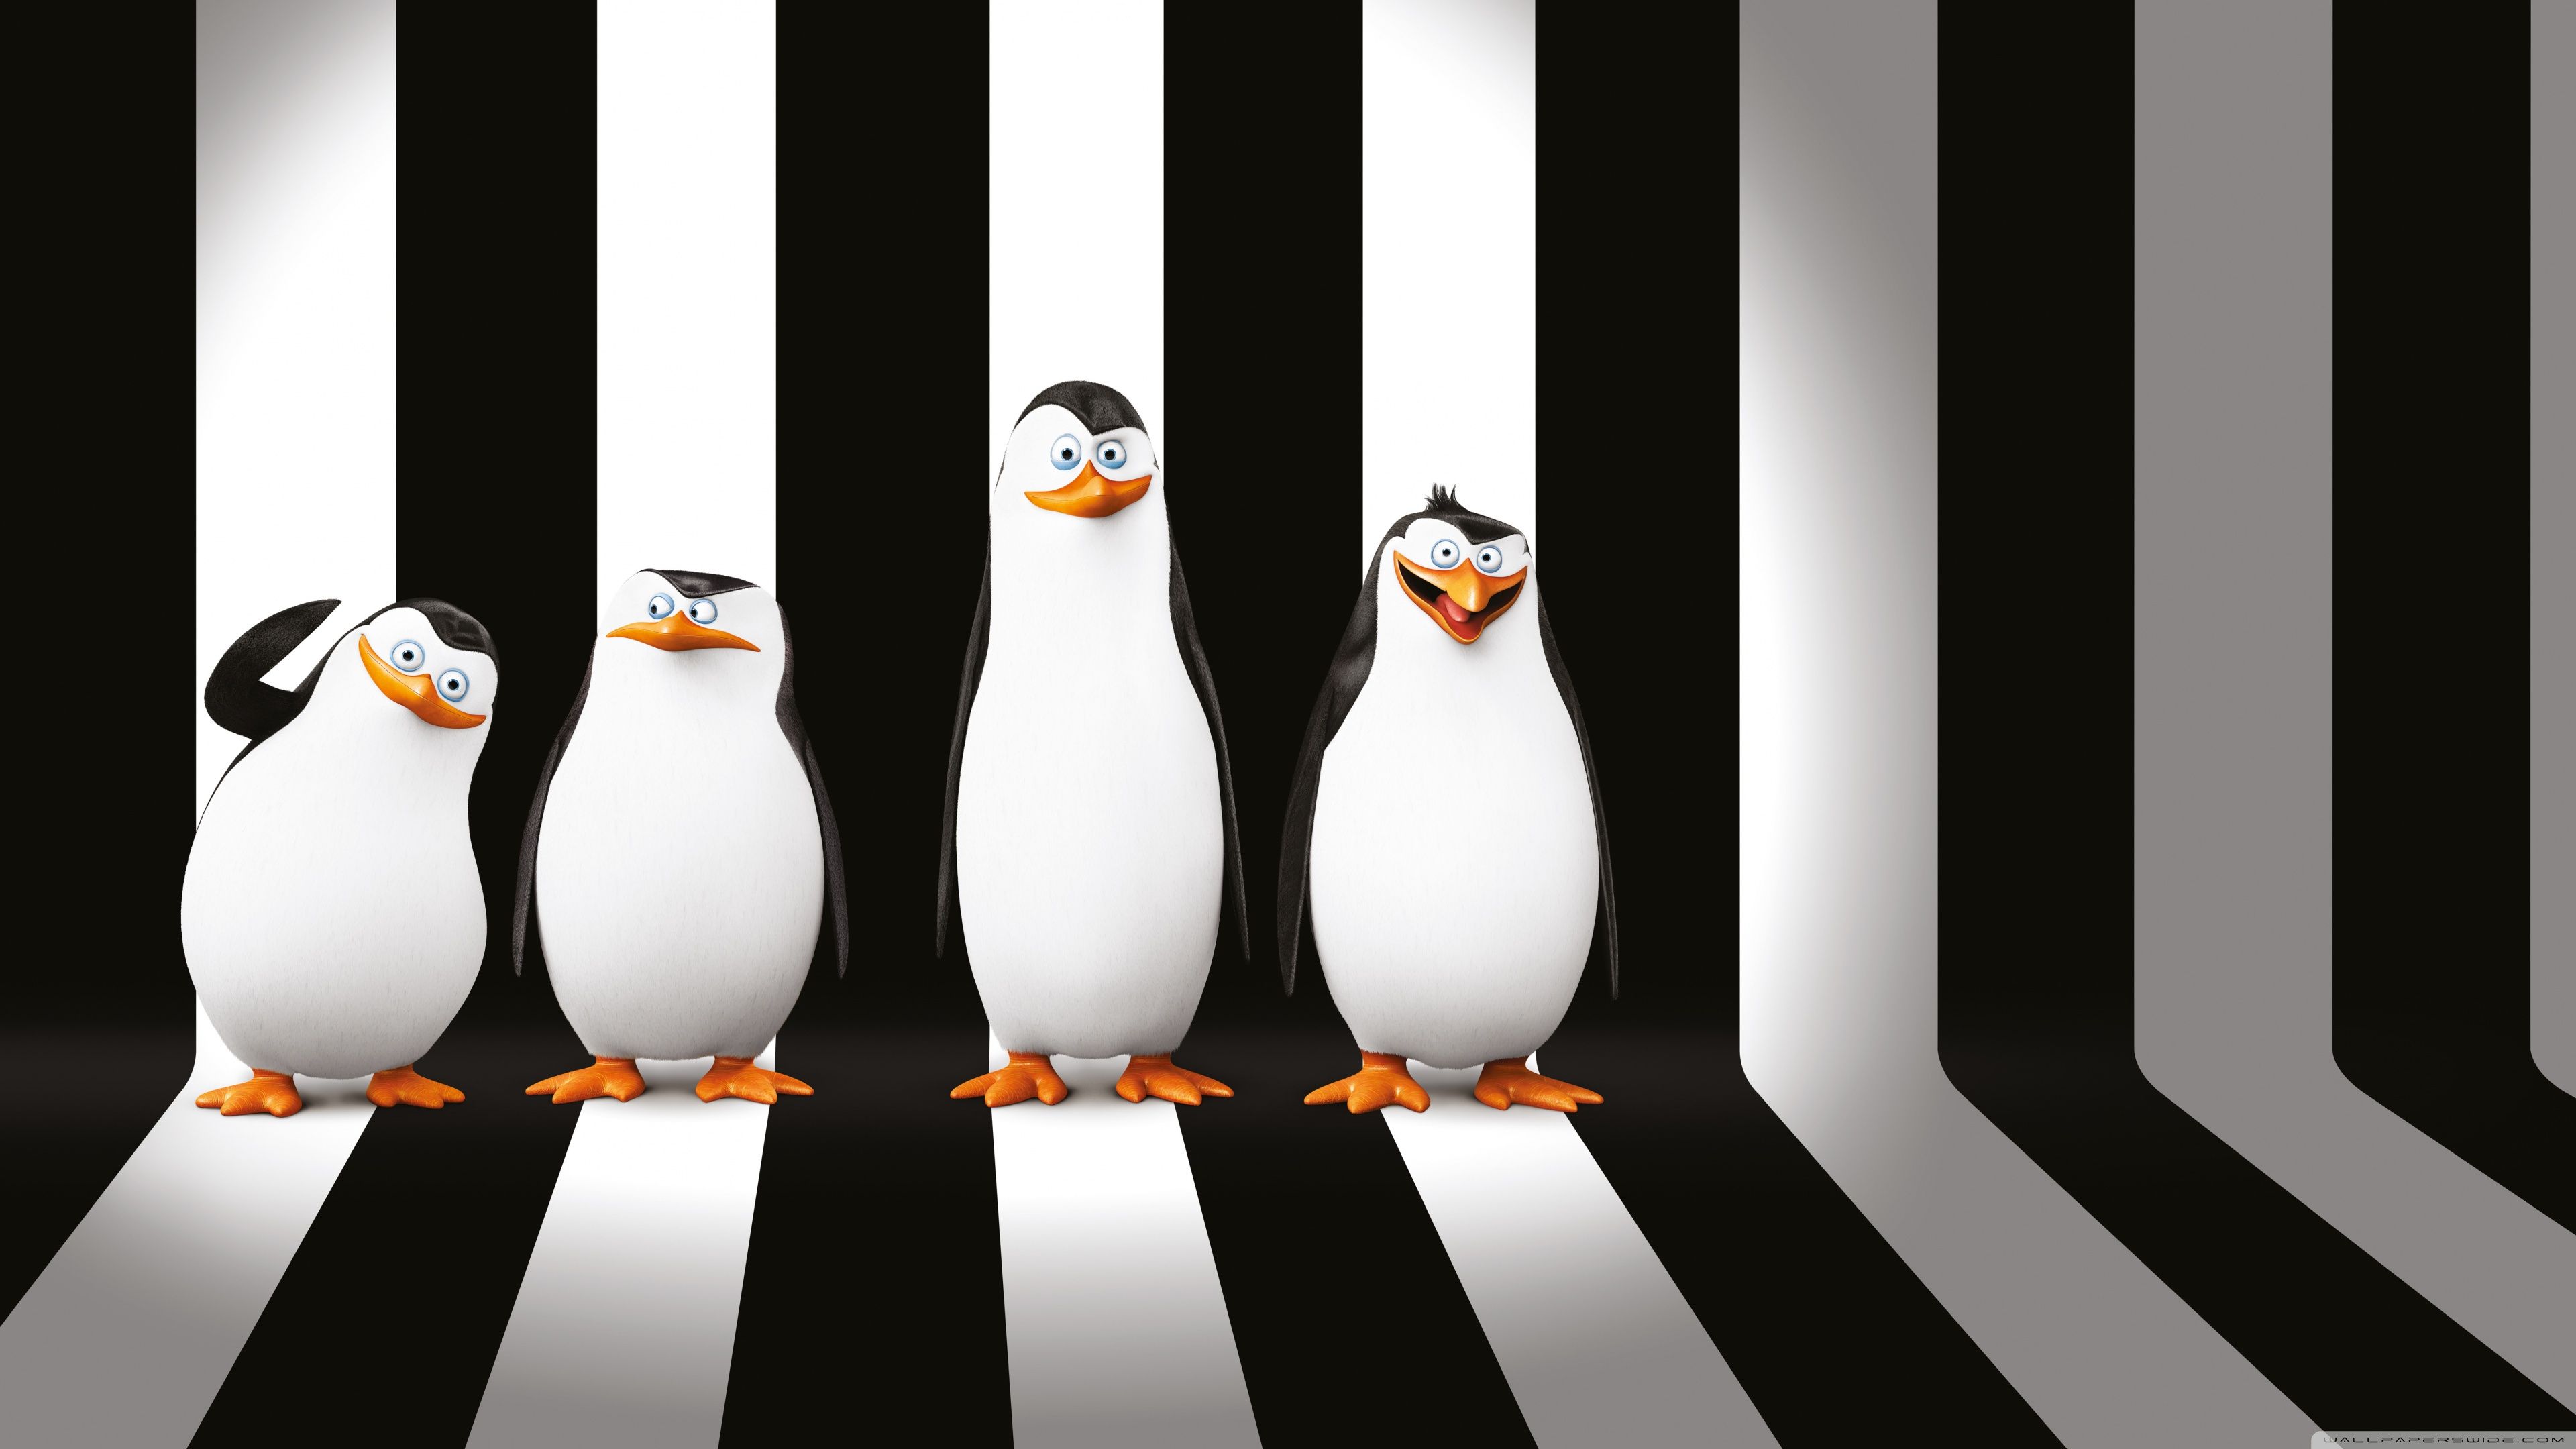 The Penguins of Madagascar